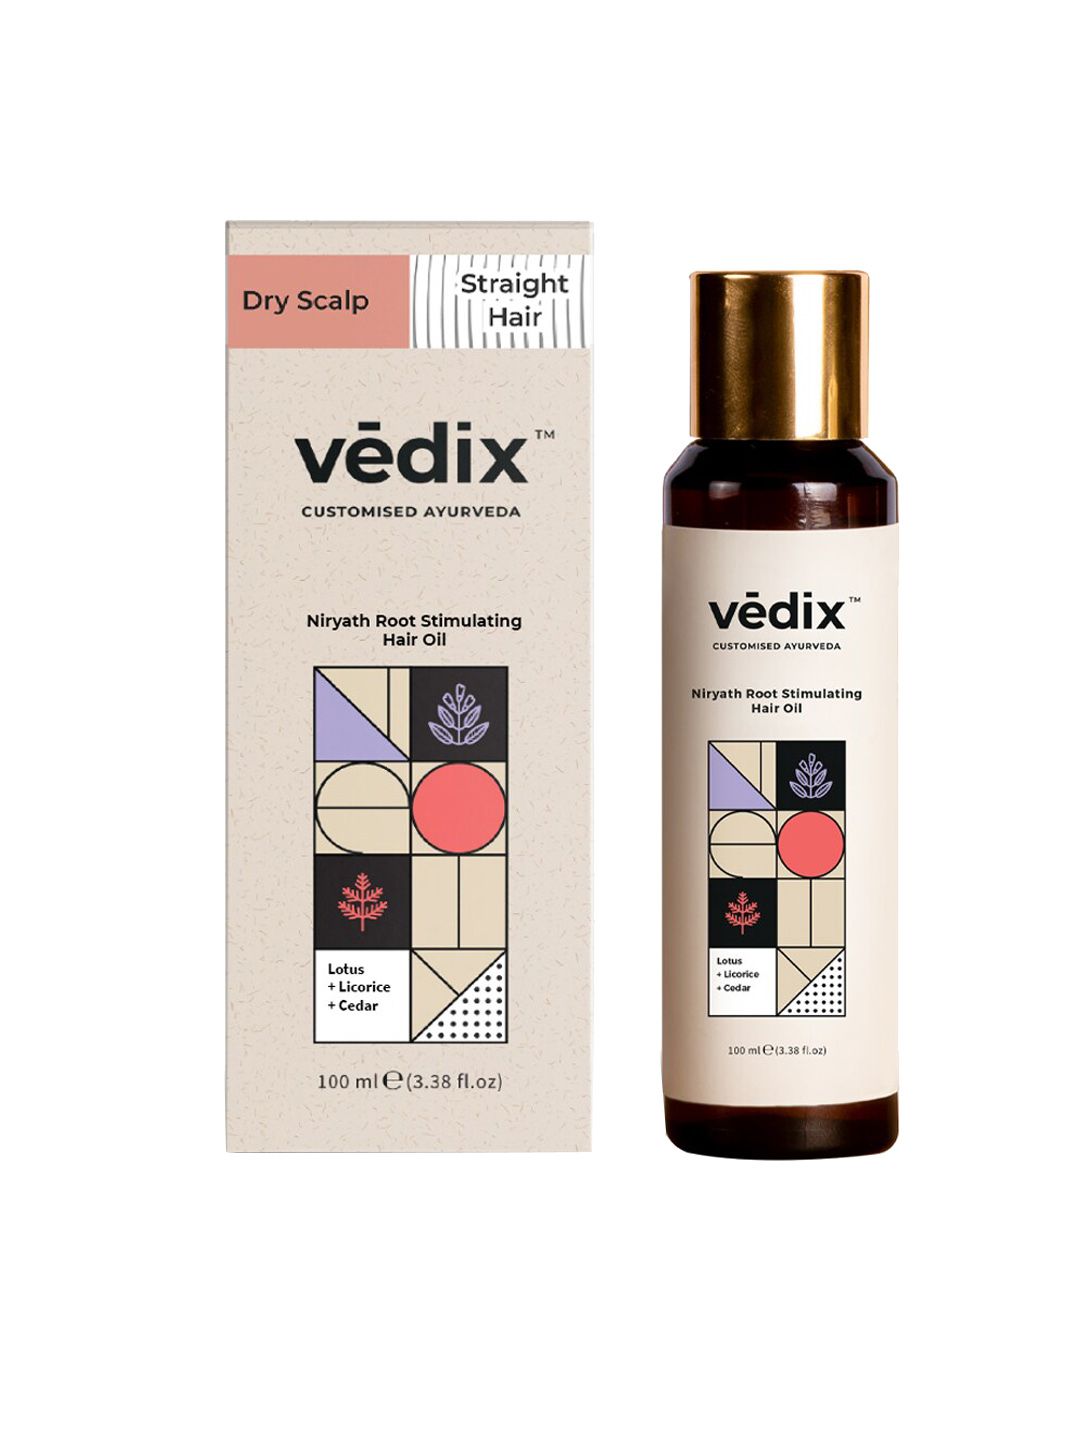 VEDIX Customized Ayurvedic Niryath Root Stimulating Hair Oil for Dry Scalp - Straight Hair Price in India